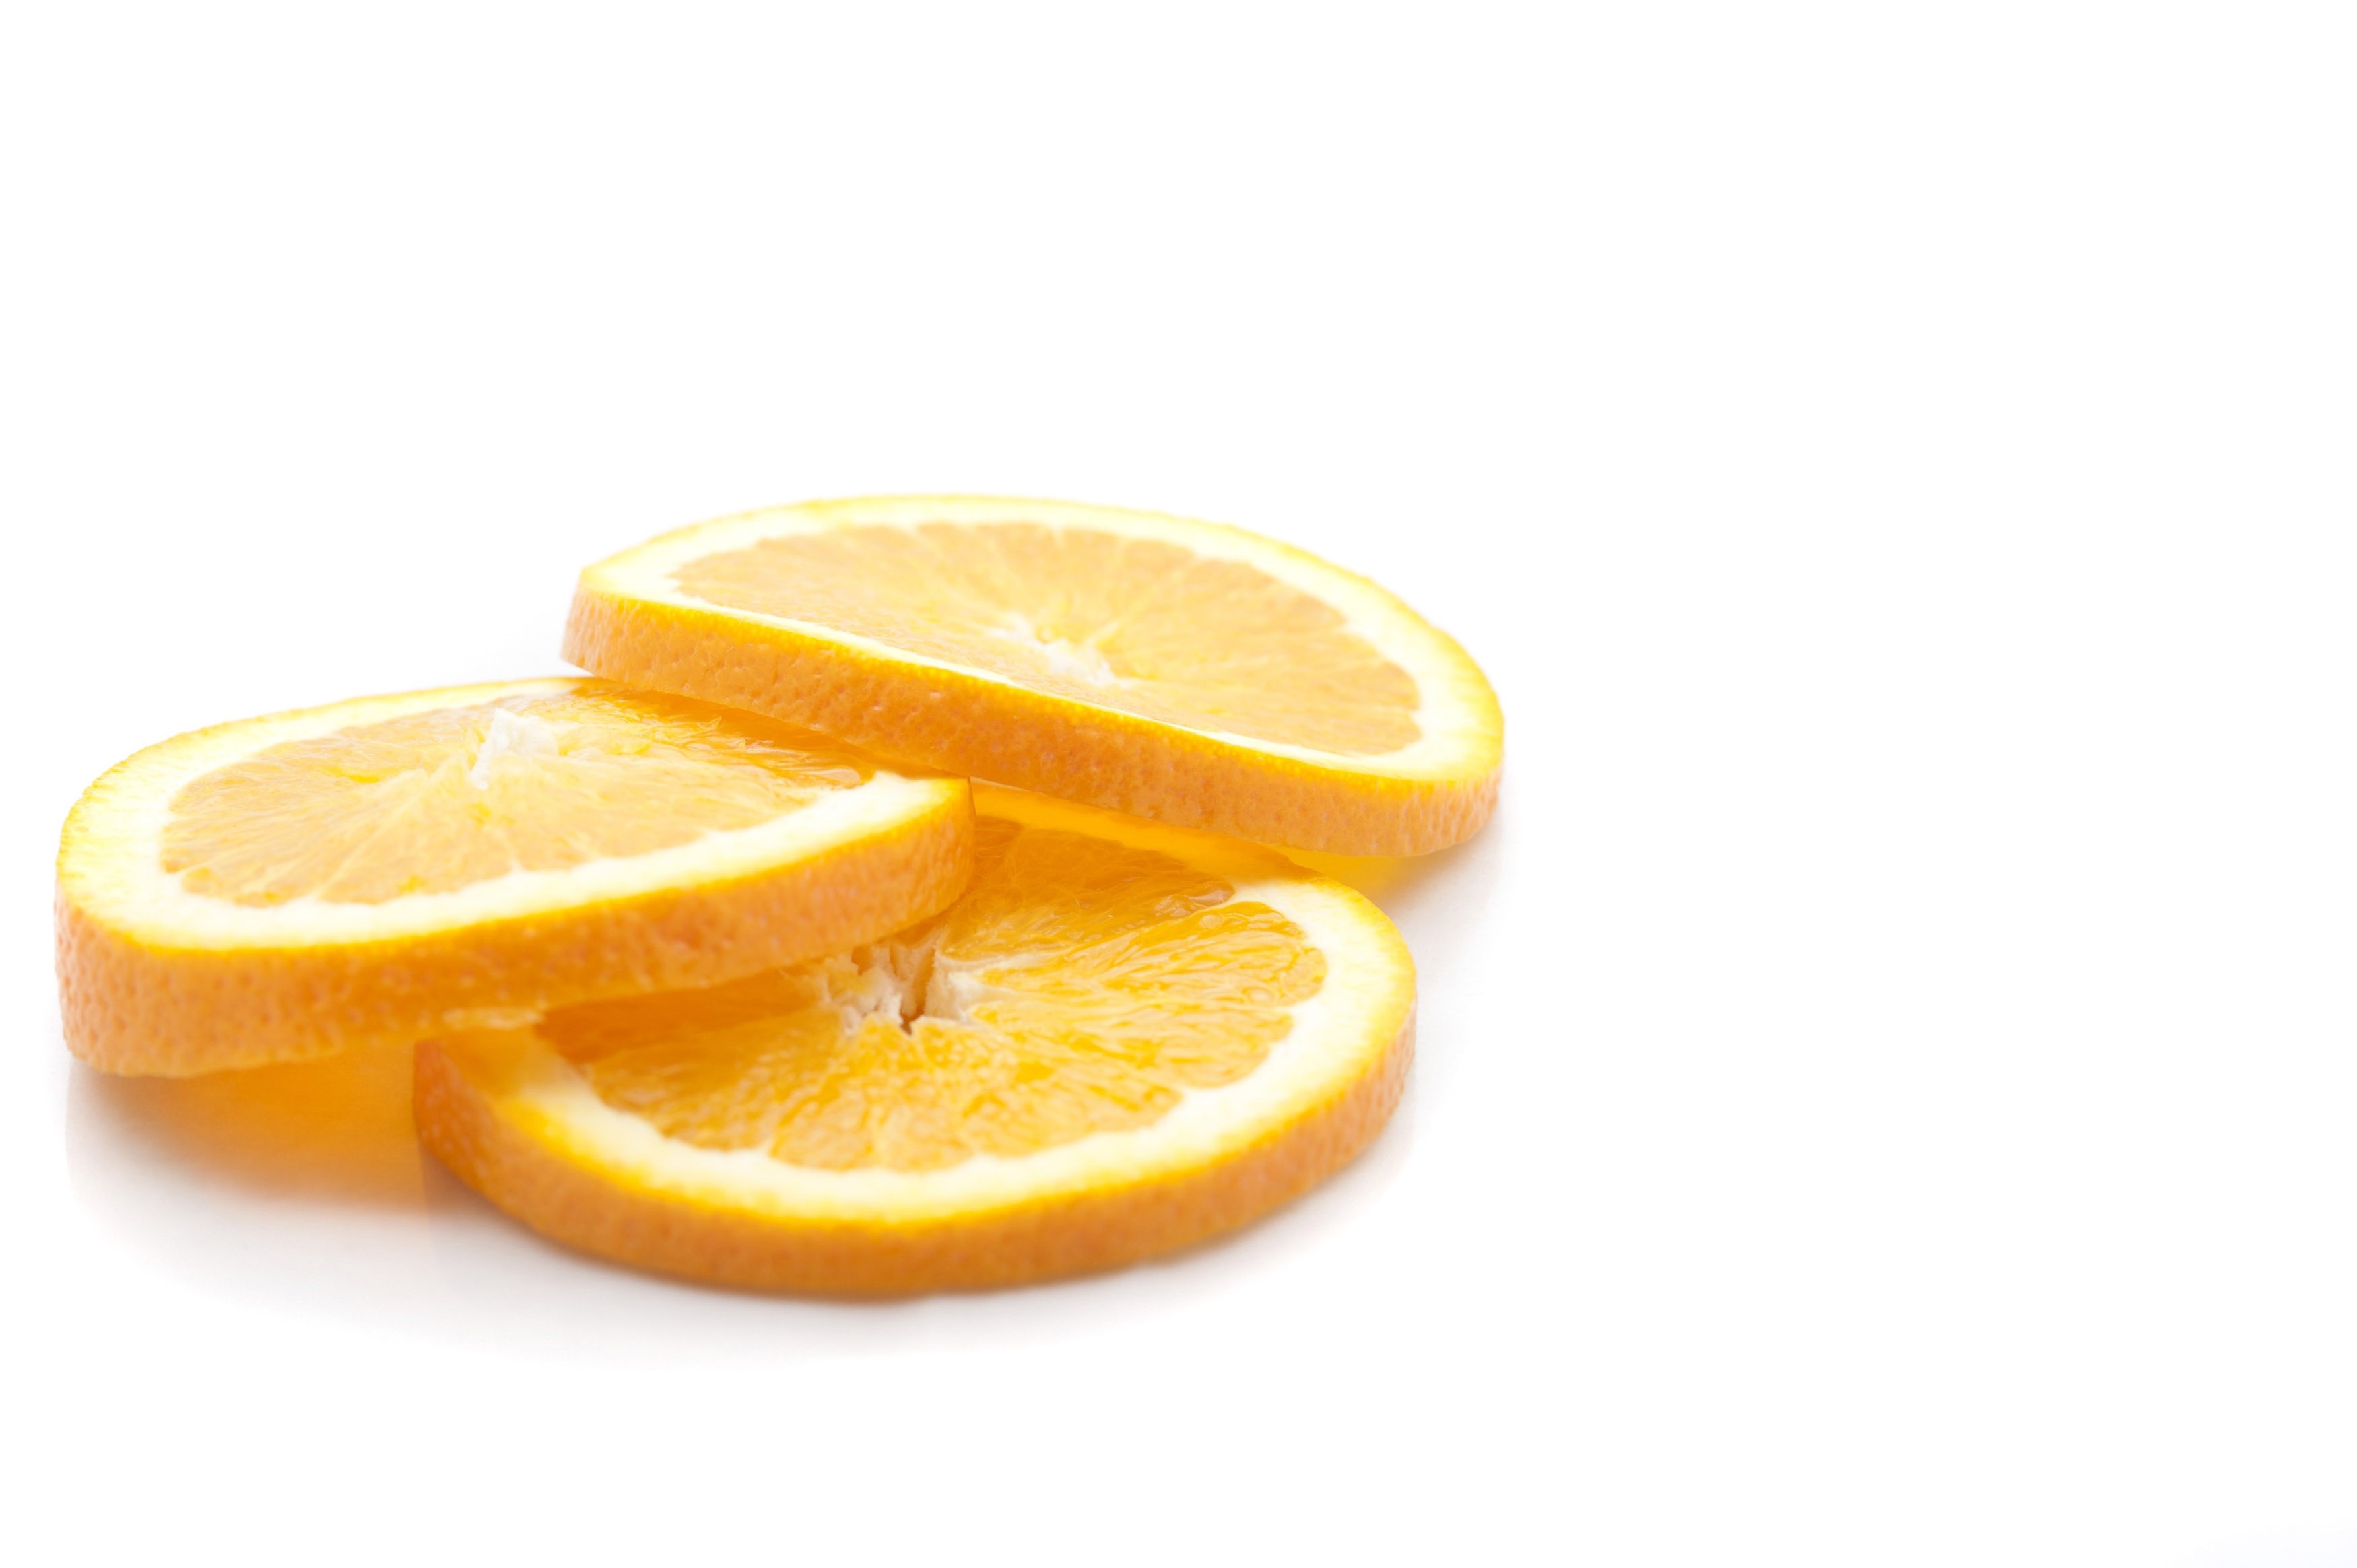 Three slices of fresh yellow juicy lemons - Free Stock Image